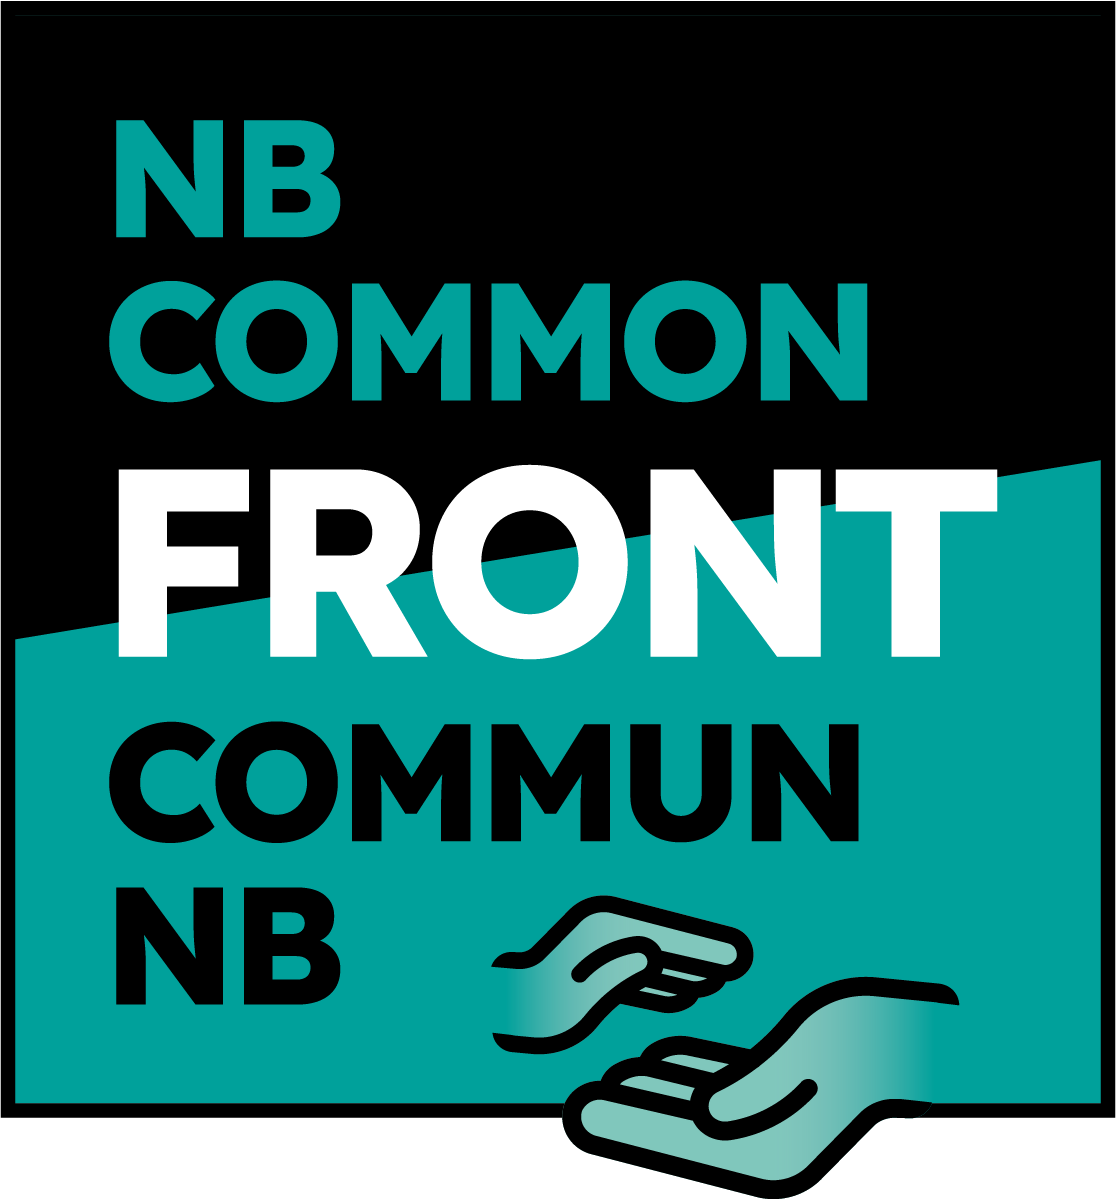 NB Common Front commun NB